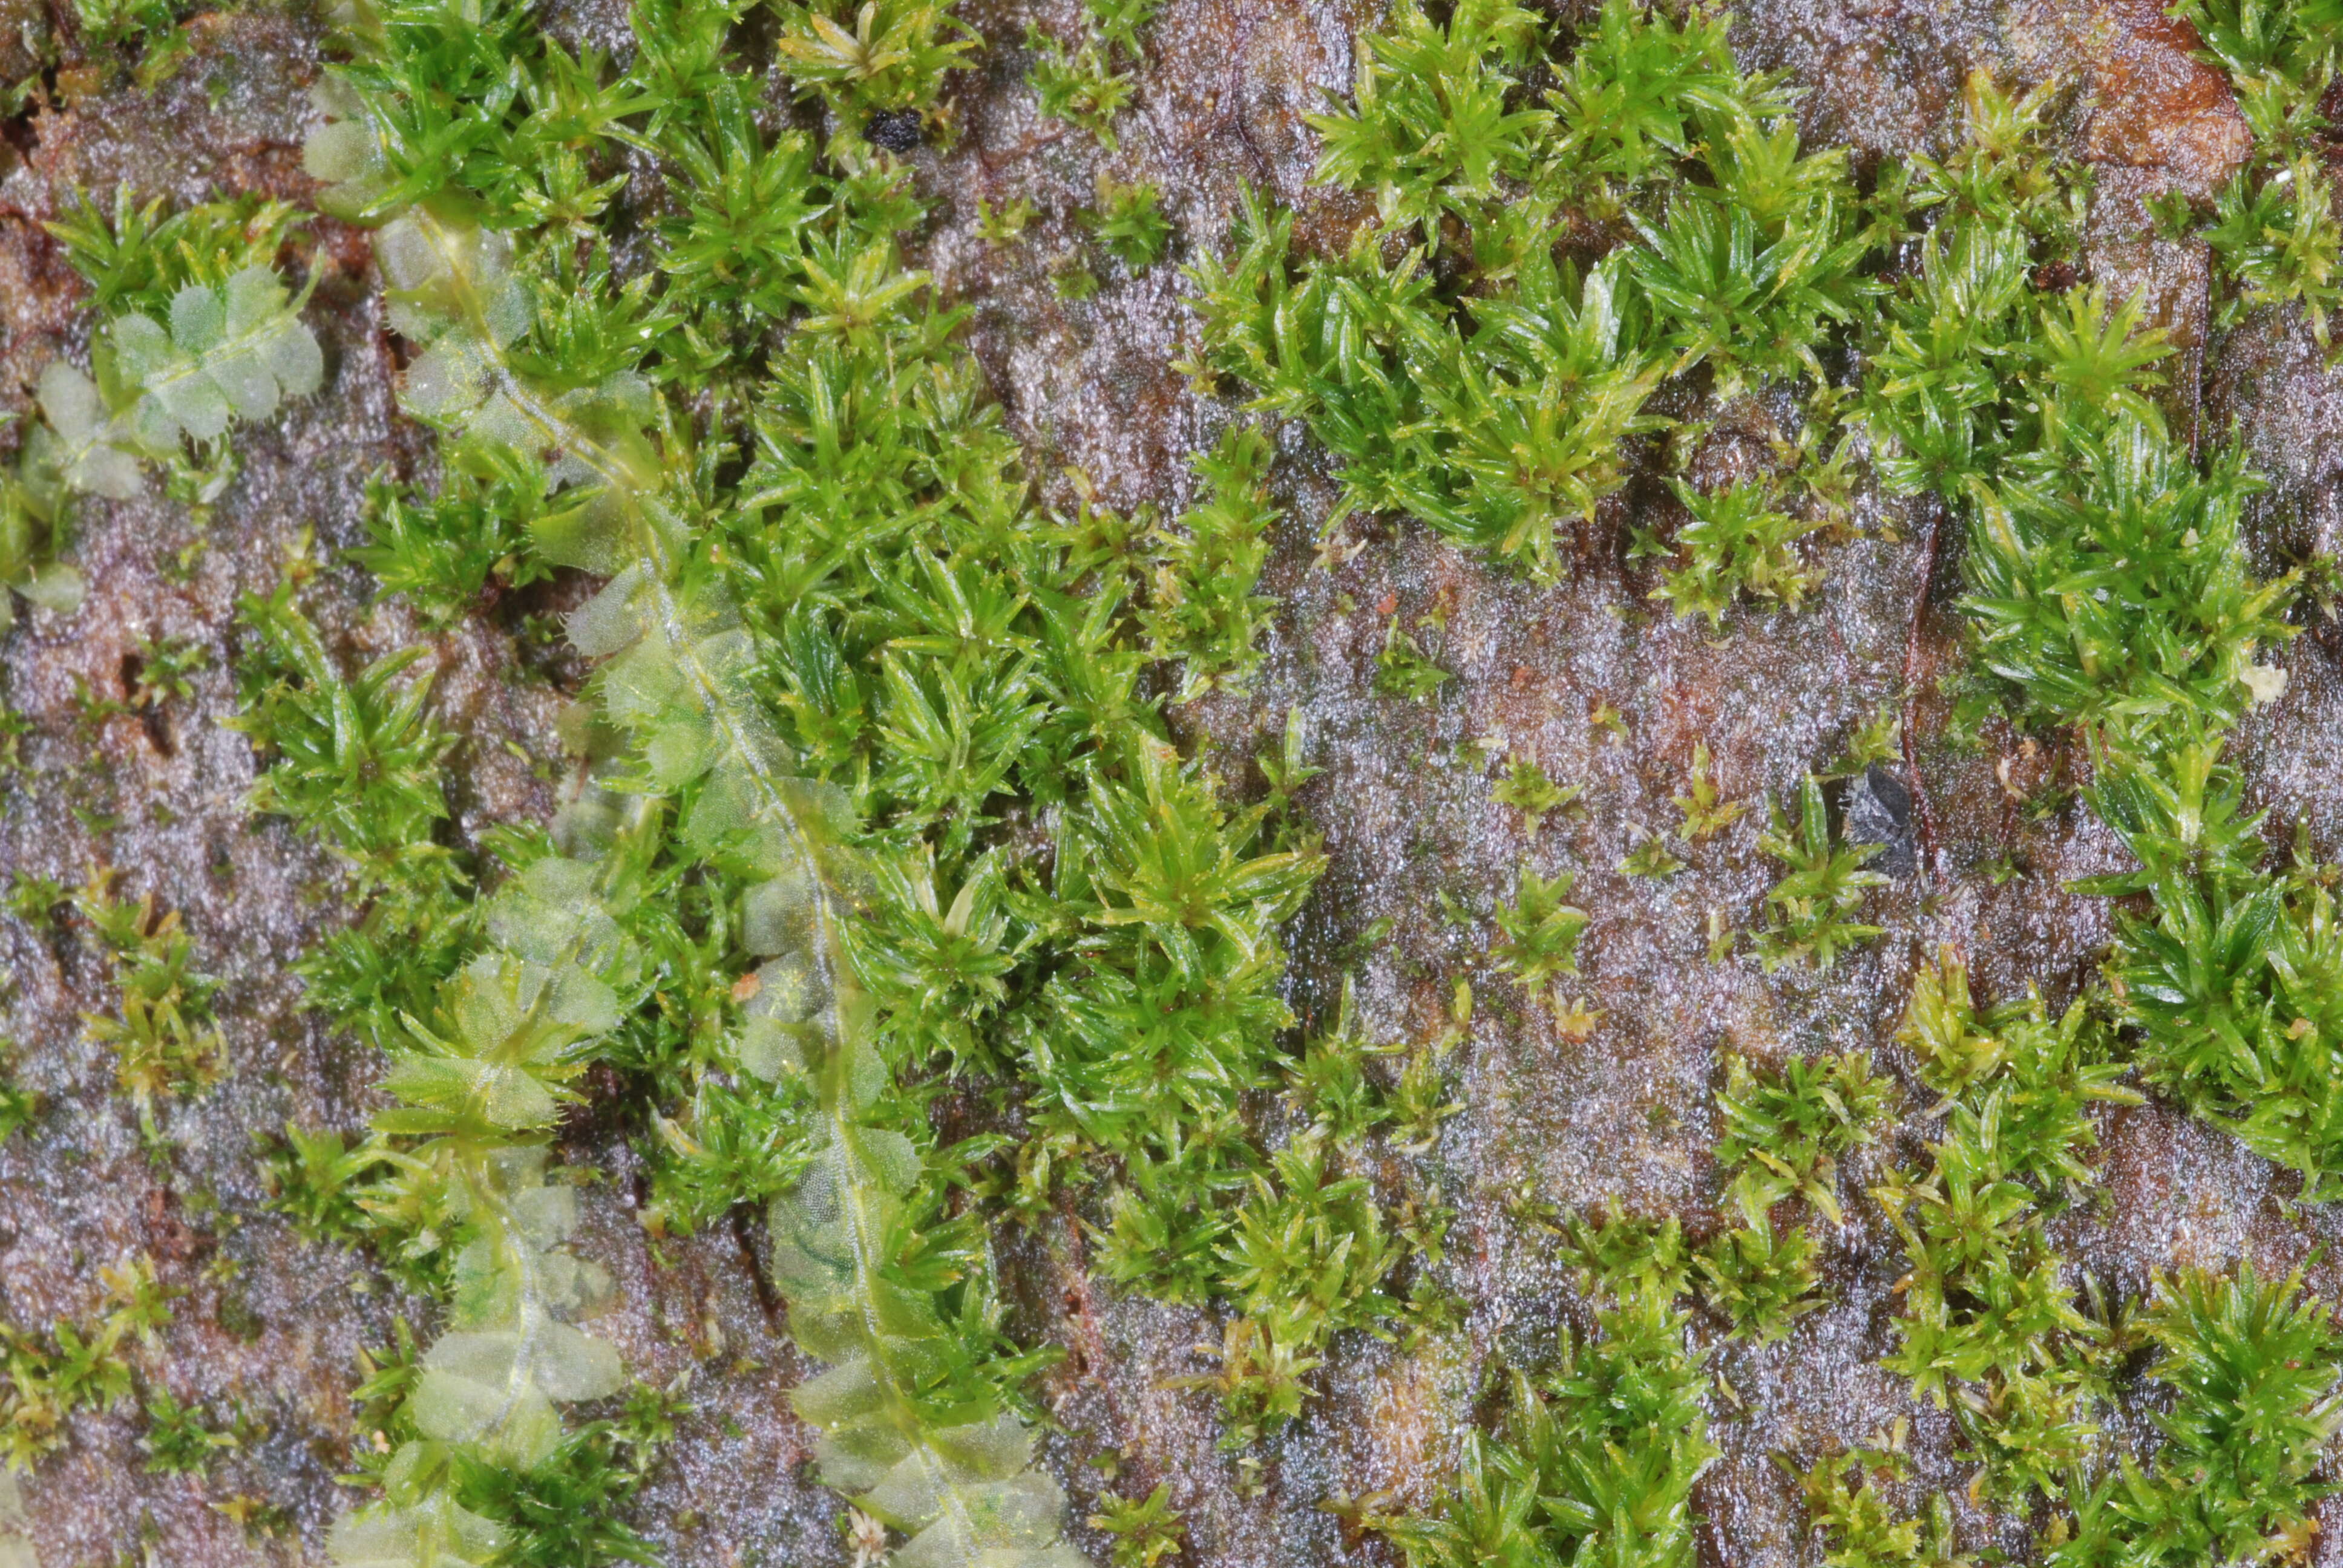 Image of syrrhopodon moss